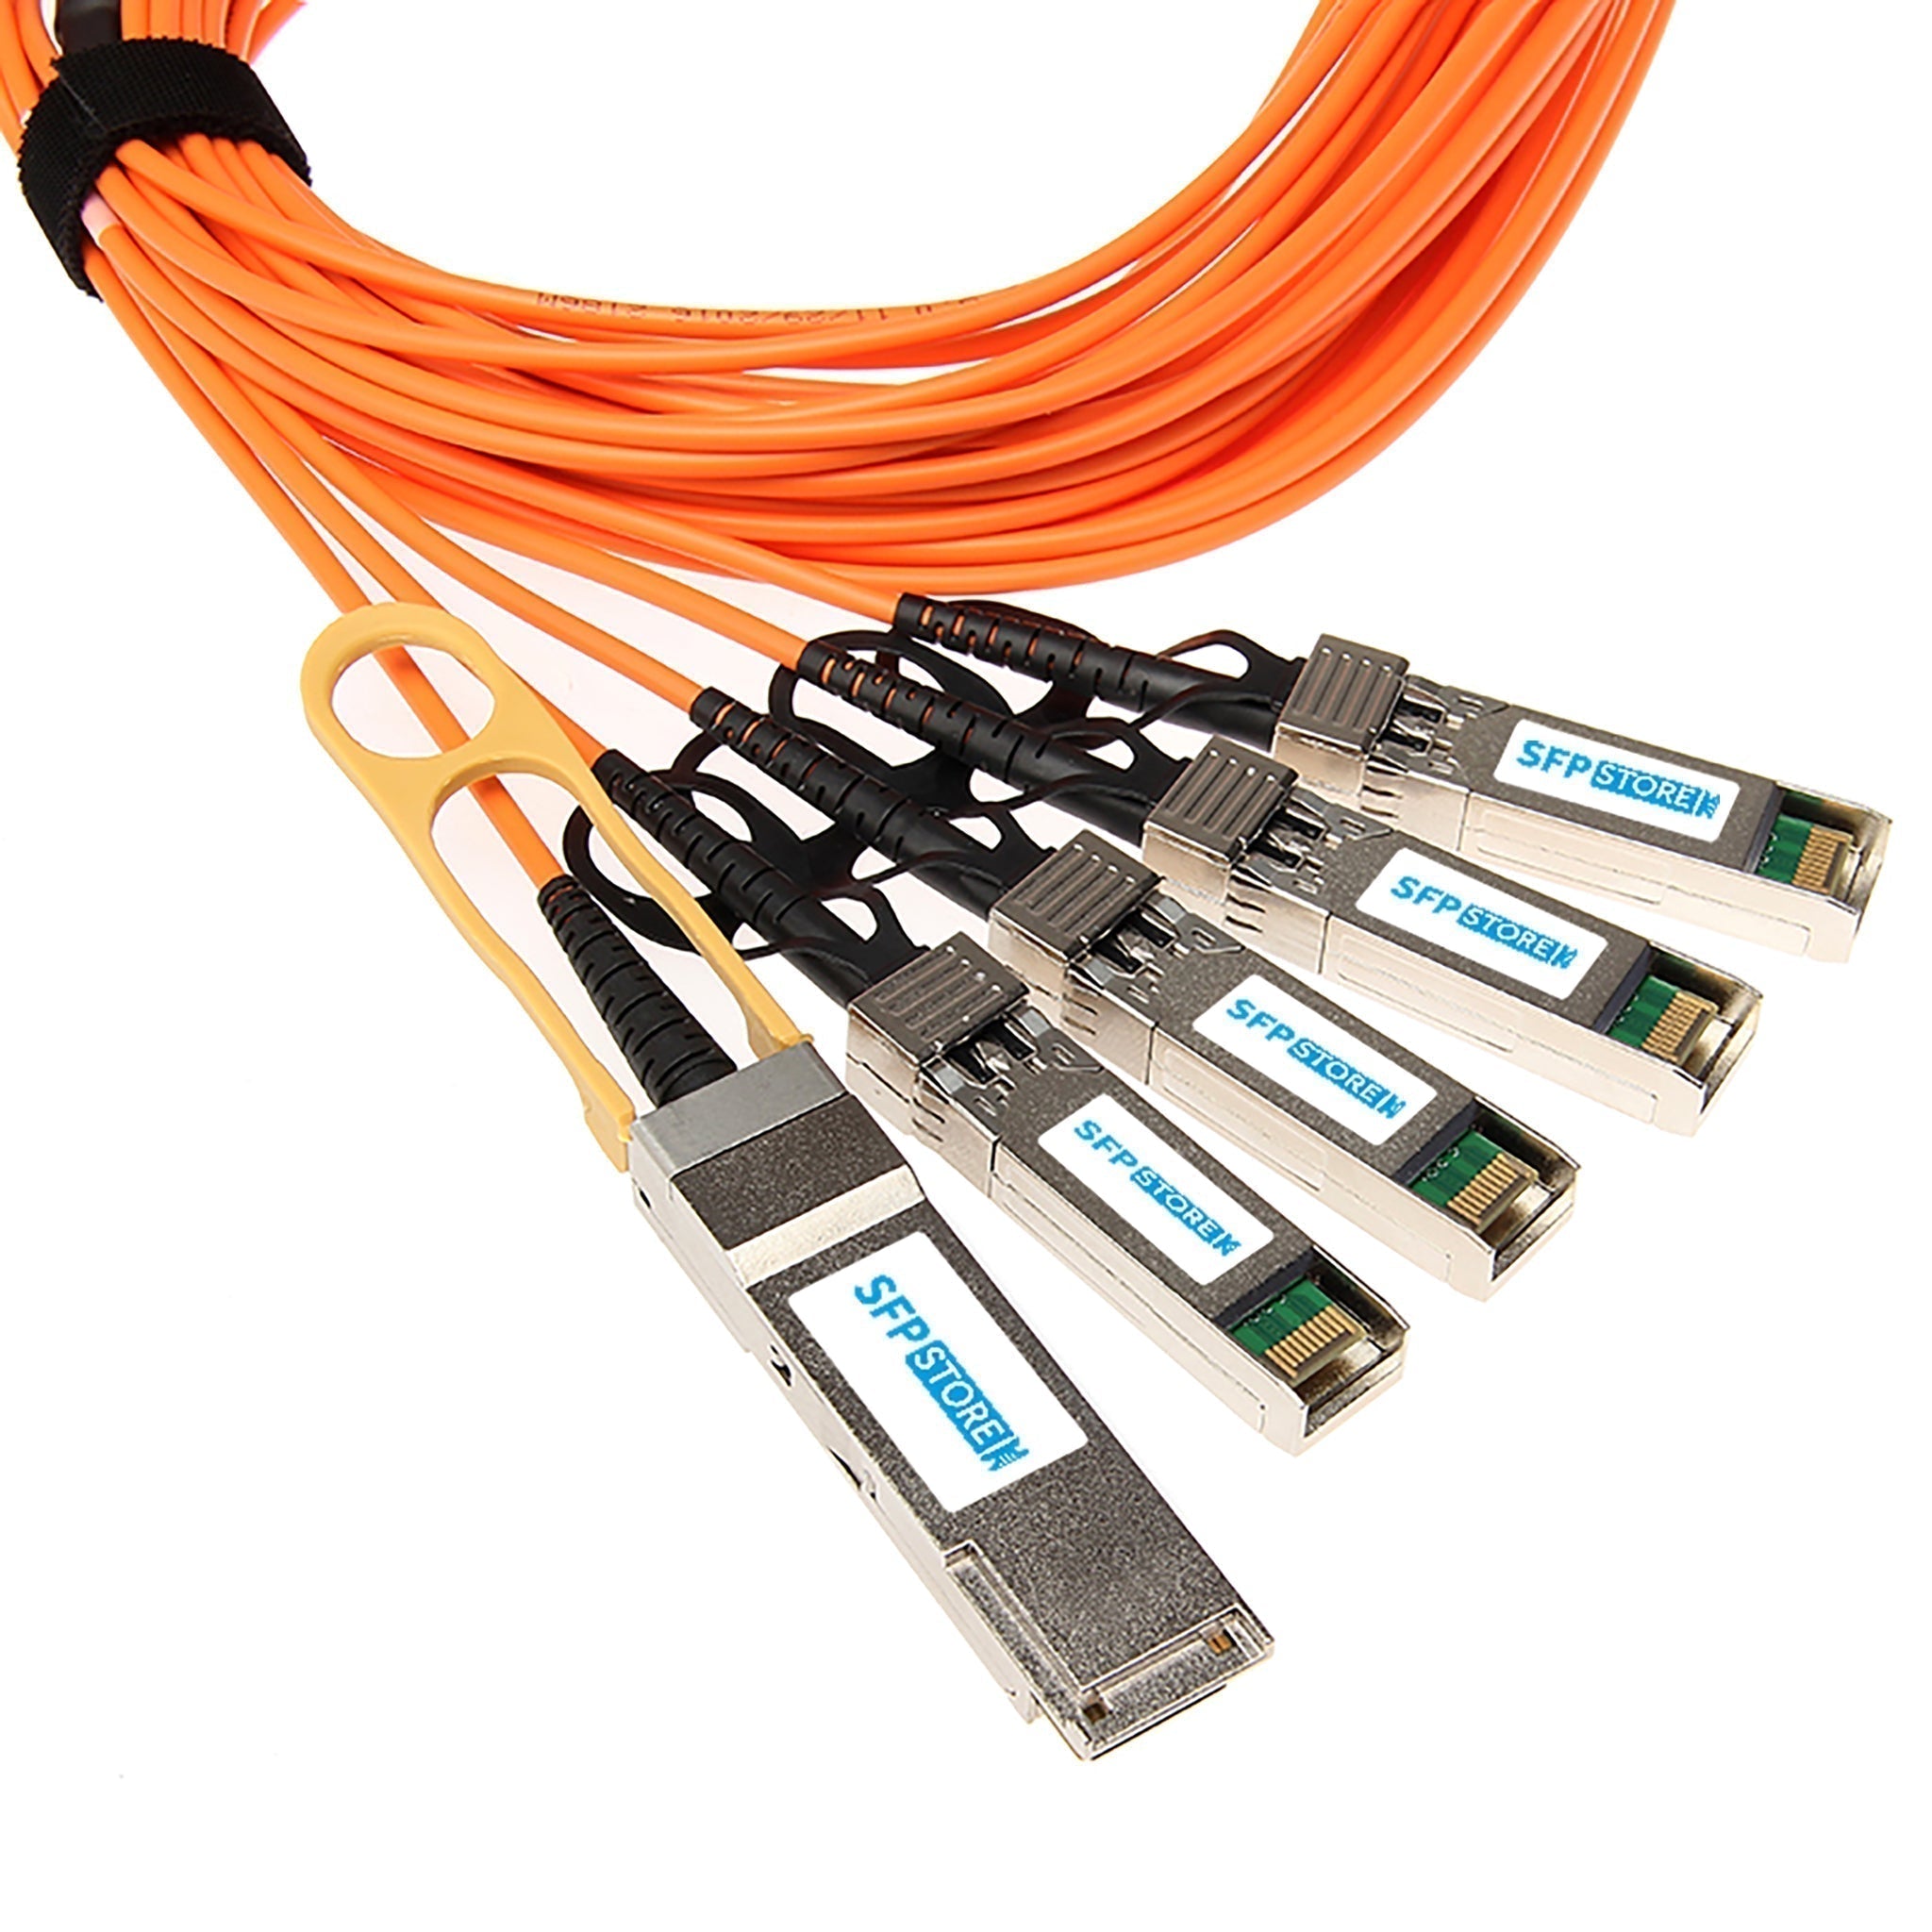 QSFP-4SFP25G-AOC7M-C - 7m Cisco Compatible 100G QSFP28 to 4 x 25G SFP28 Active Optical Cable